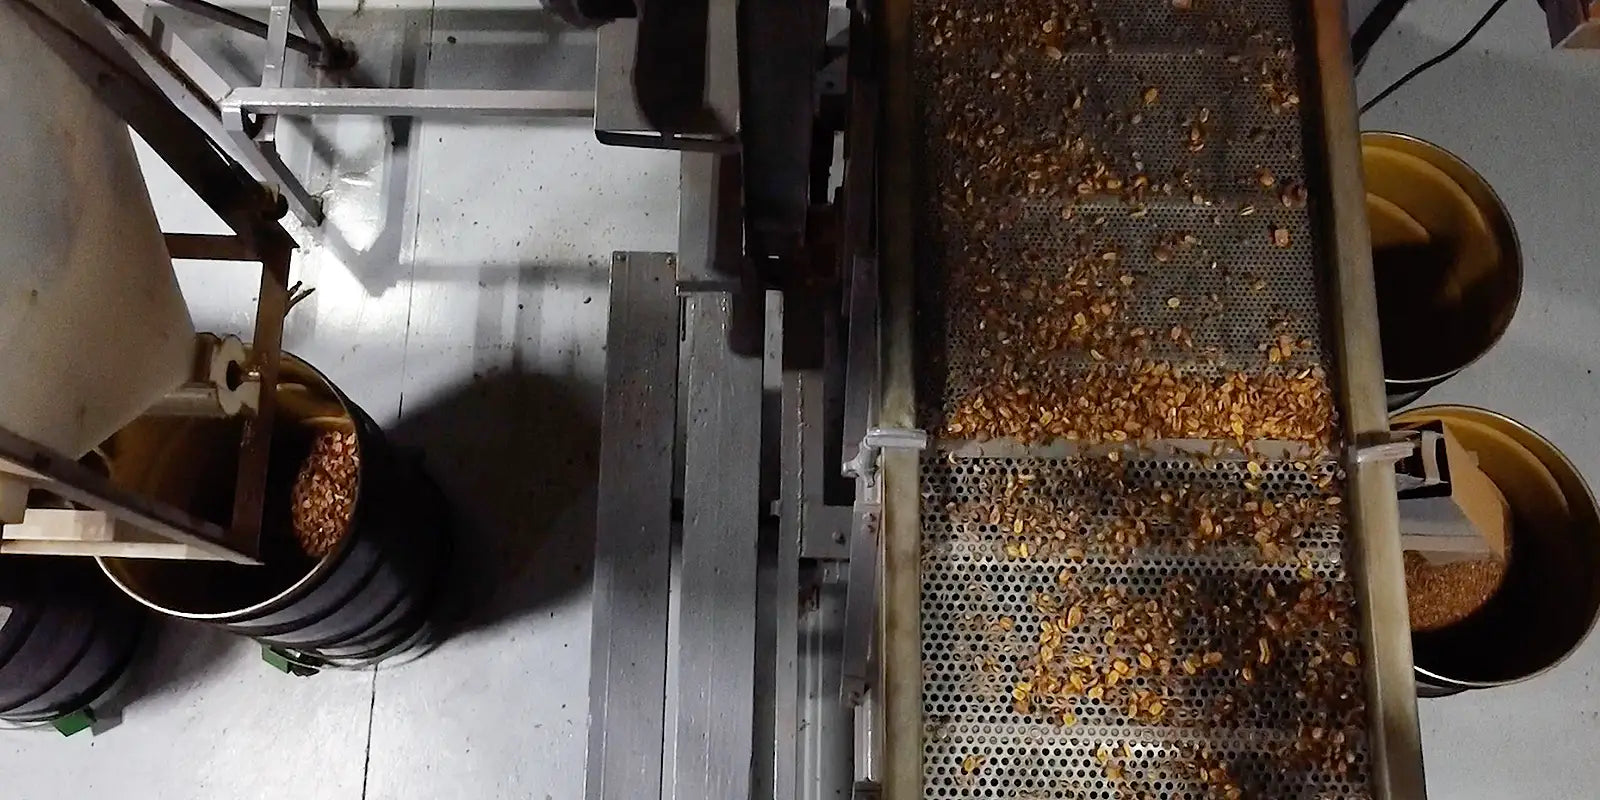 Photo of pecans going through a sheller machine